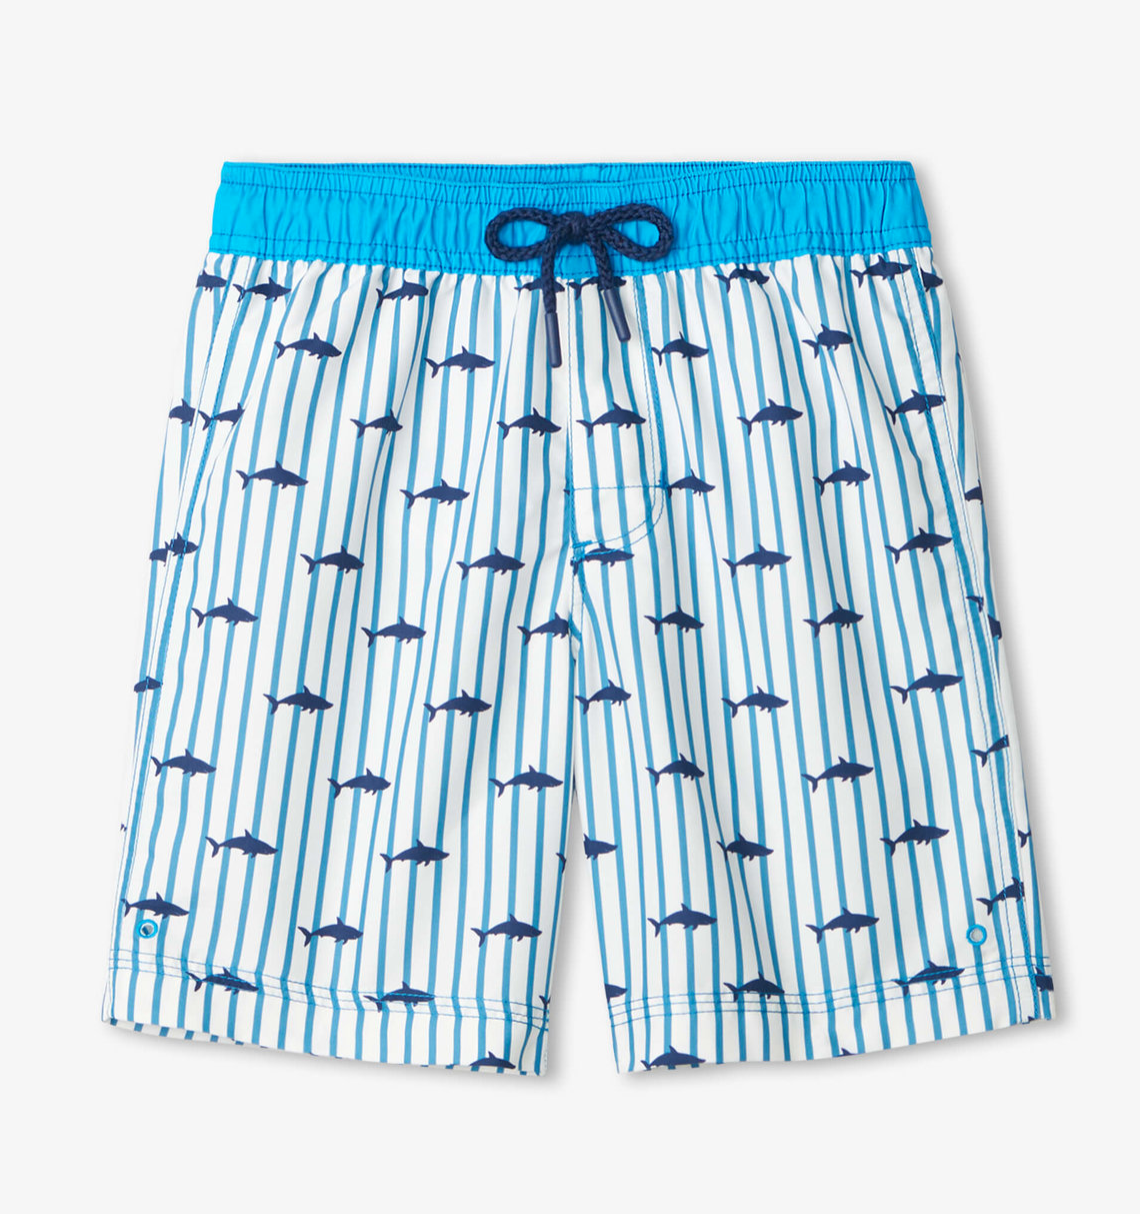 Hatley Silhouette Sharks Shorts